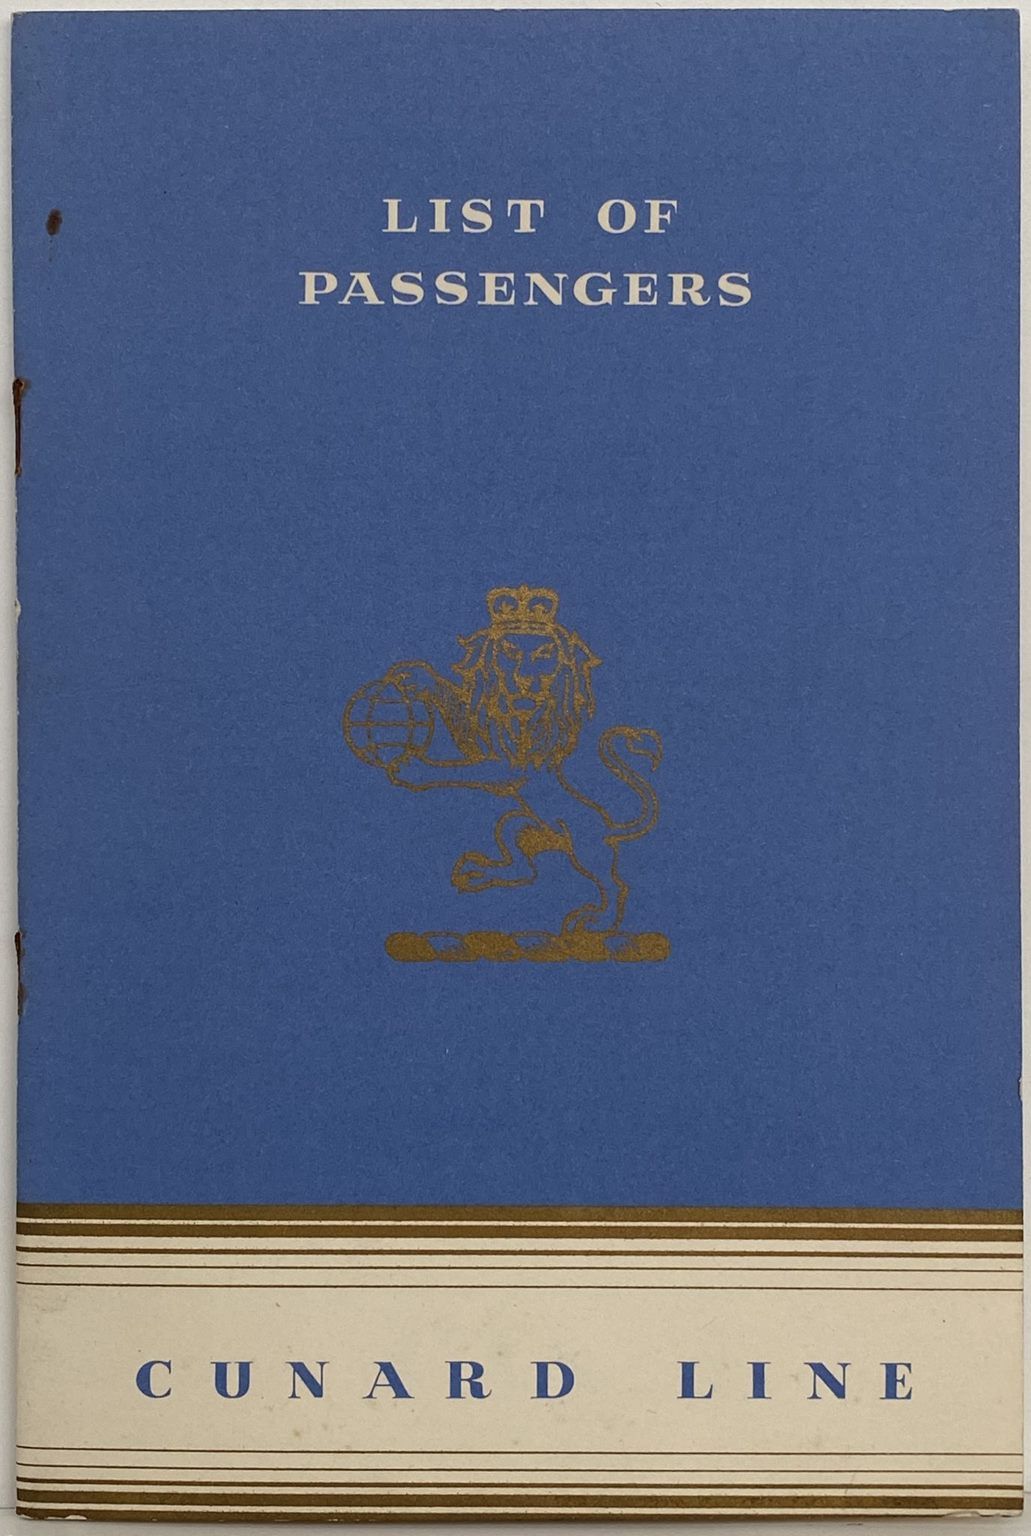 MARITIME MEMORABILIA: Cunard Line - List of Passengers R.M.S Queen Mary 1952